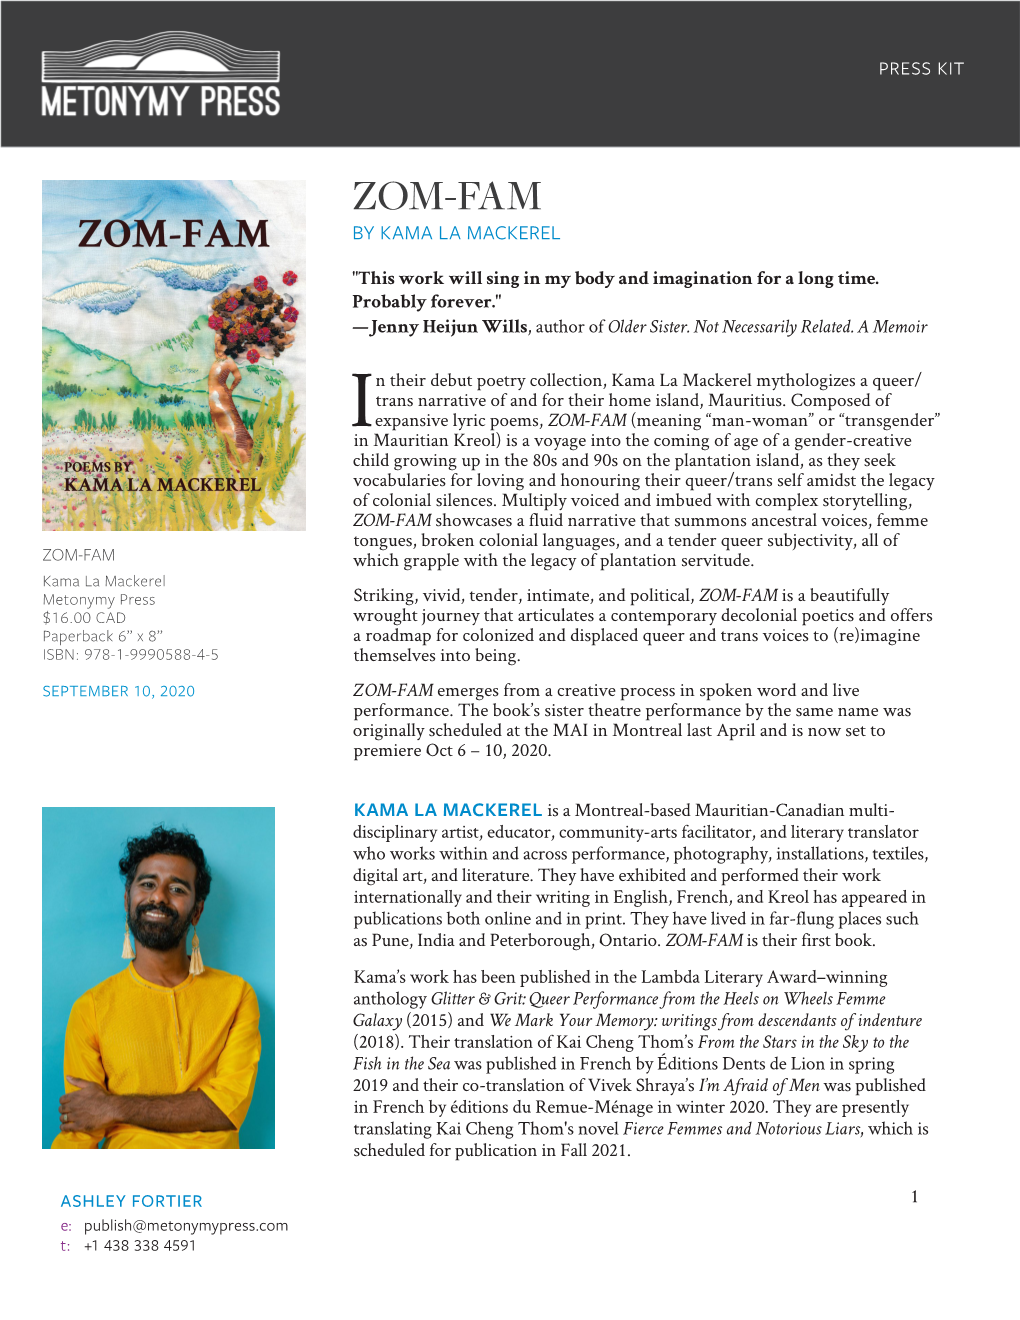 Zom-Fam by Kama La Mackerel